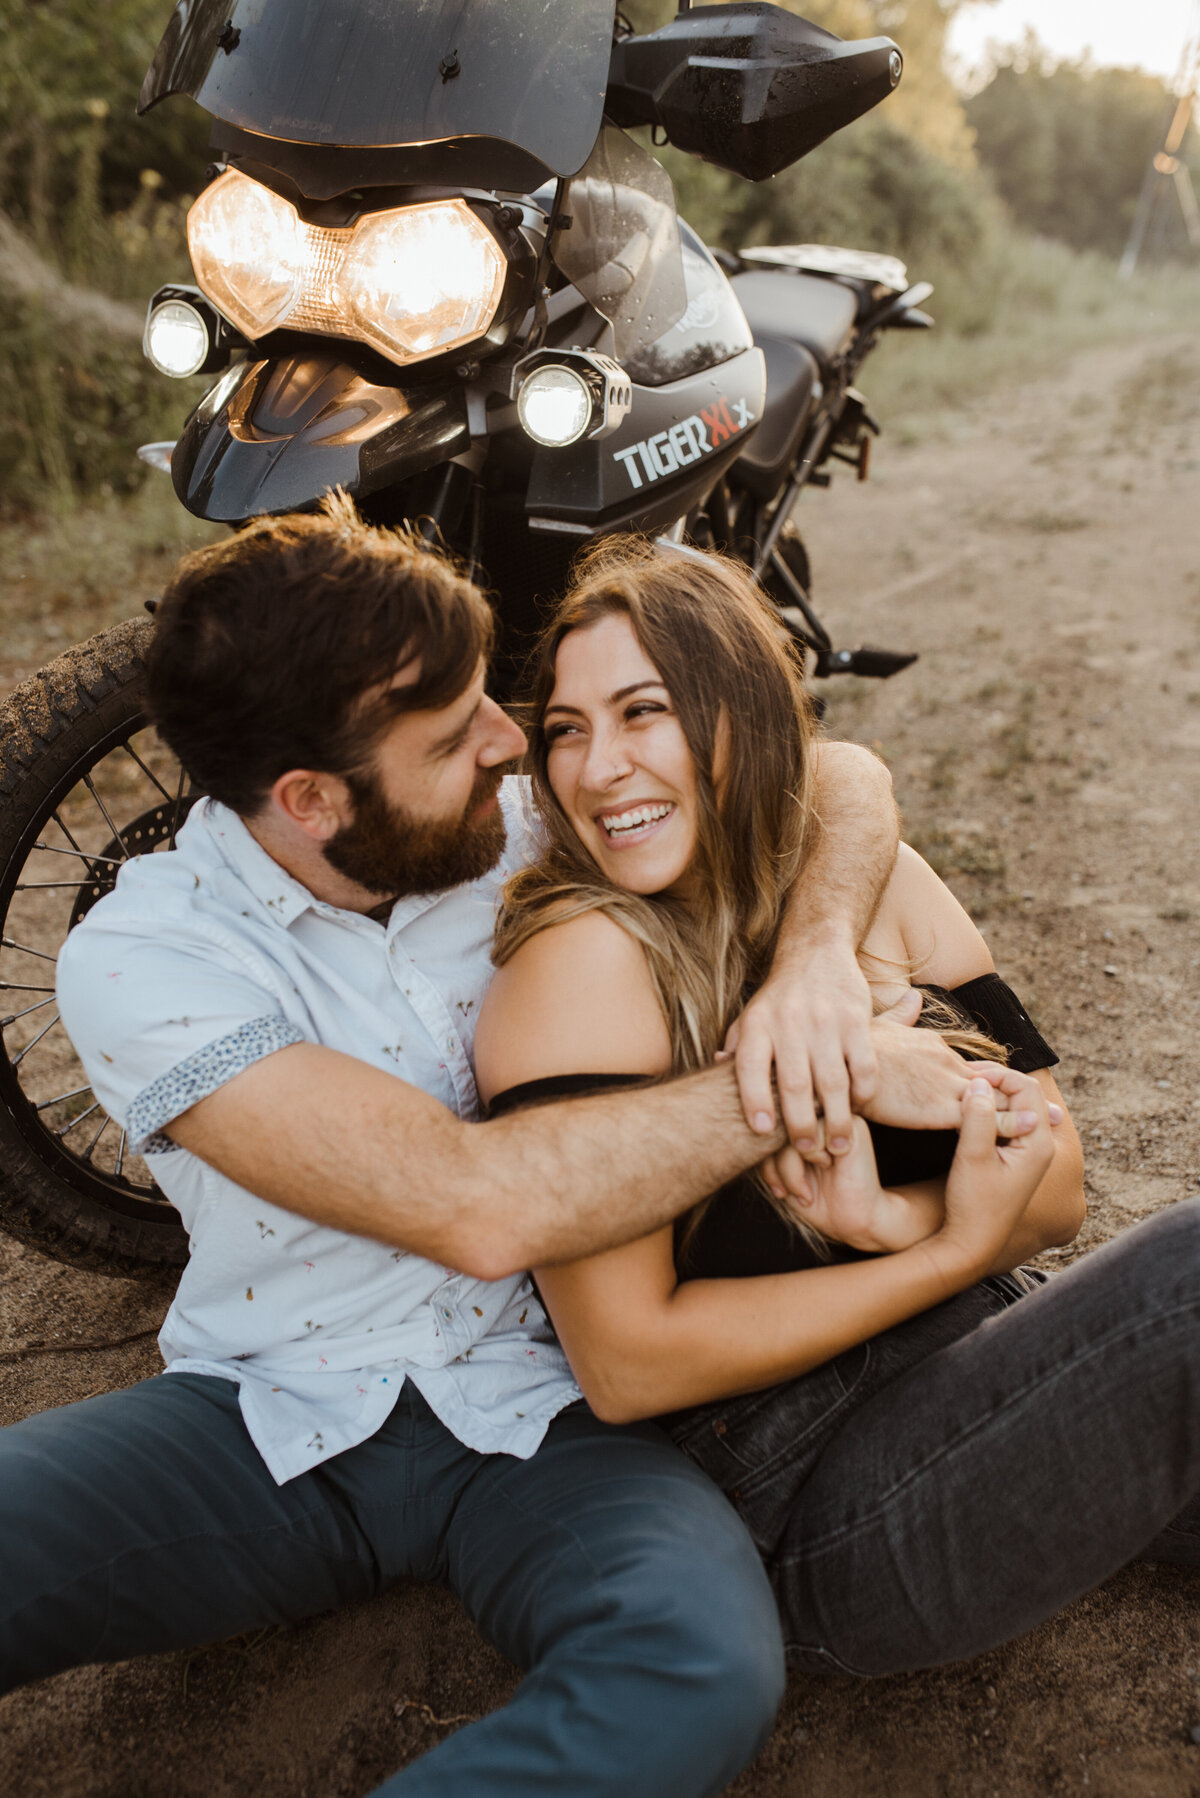 toronto-outdoor-fun-bohemian-motorcycle-engagement-couples-shoot-photography-22